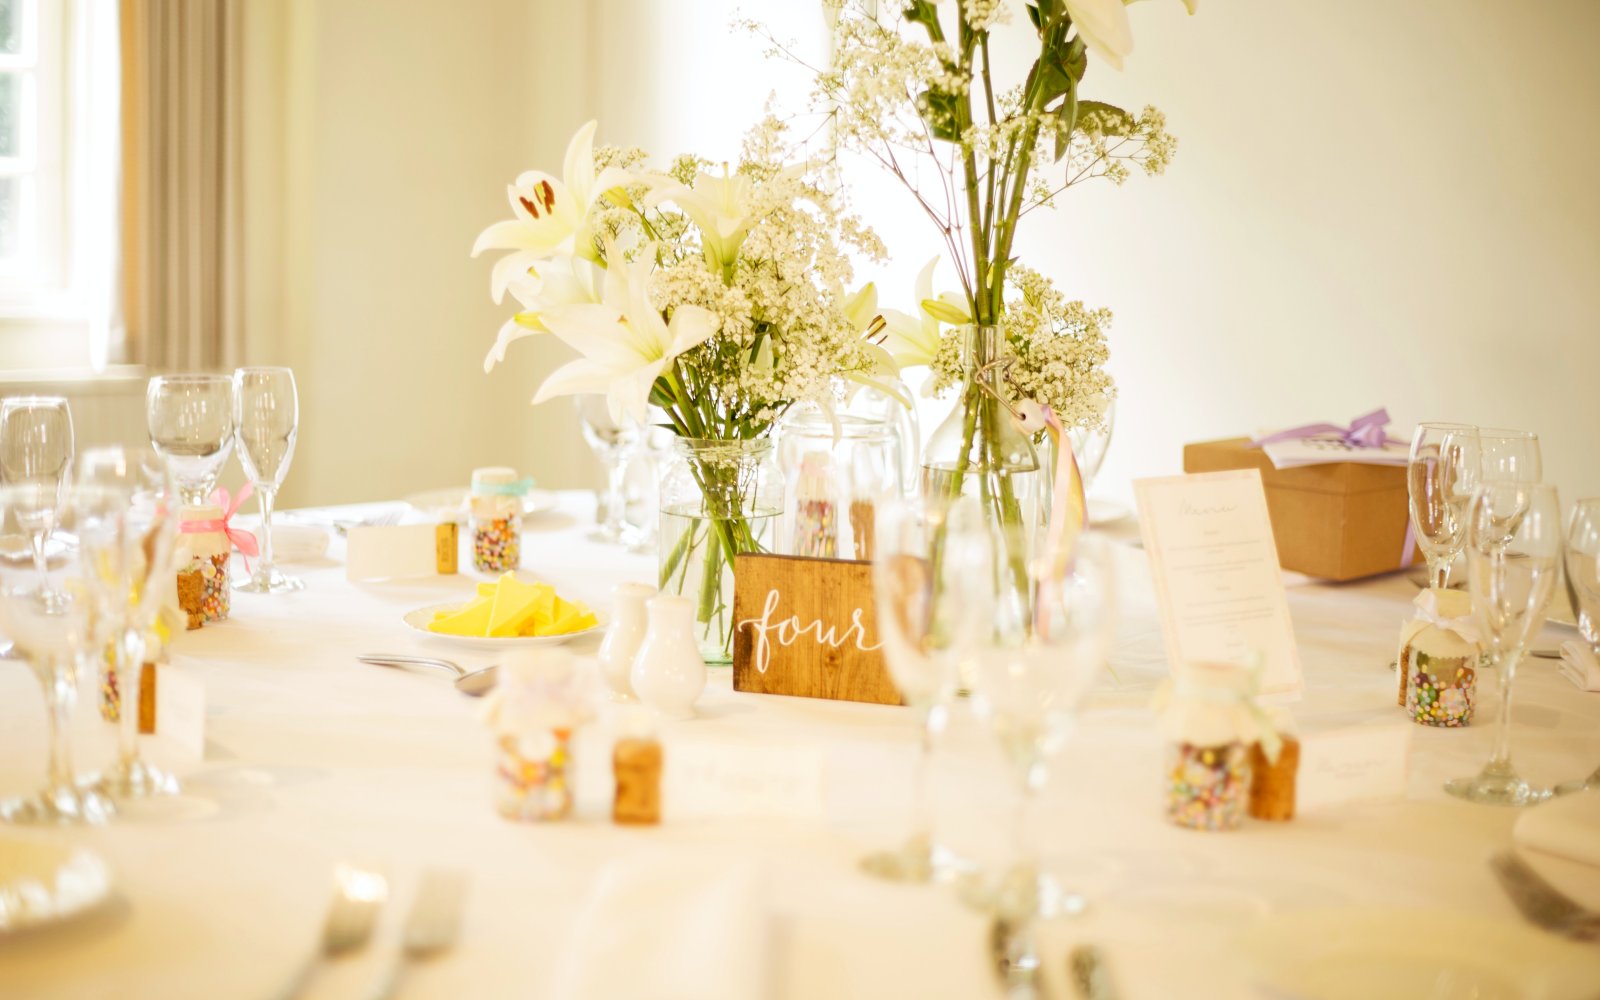 tavola matrimonio bianca con fiori freschi